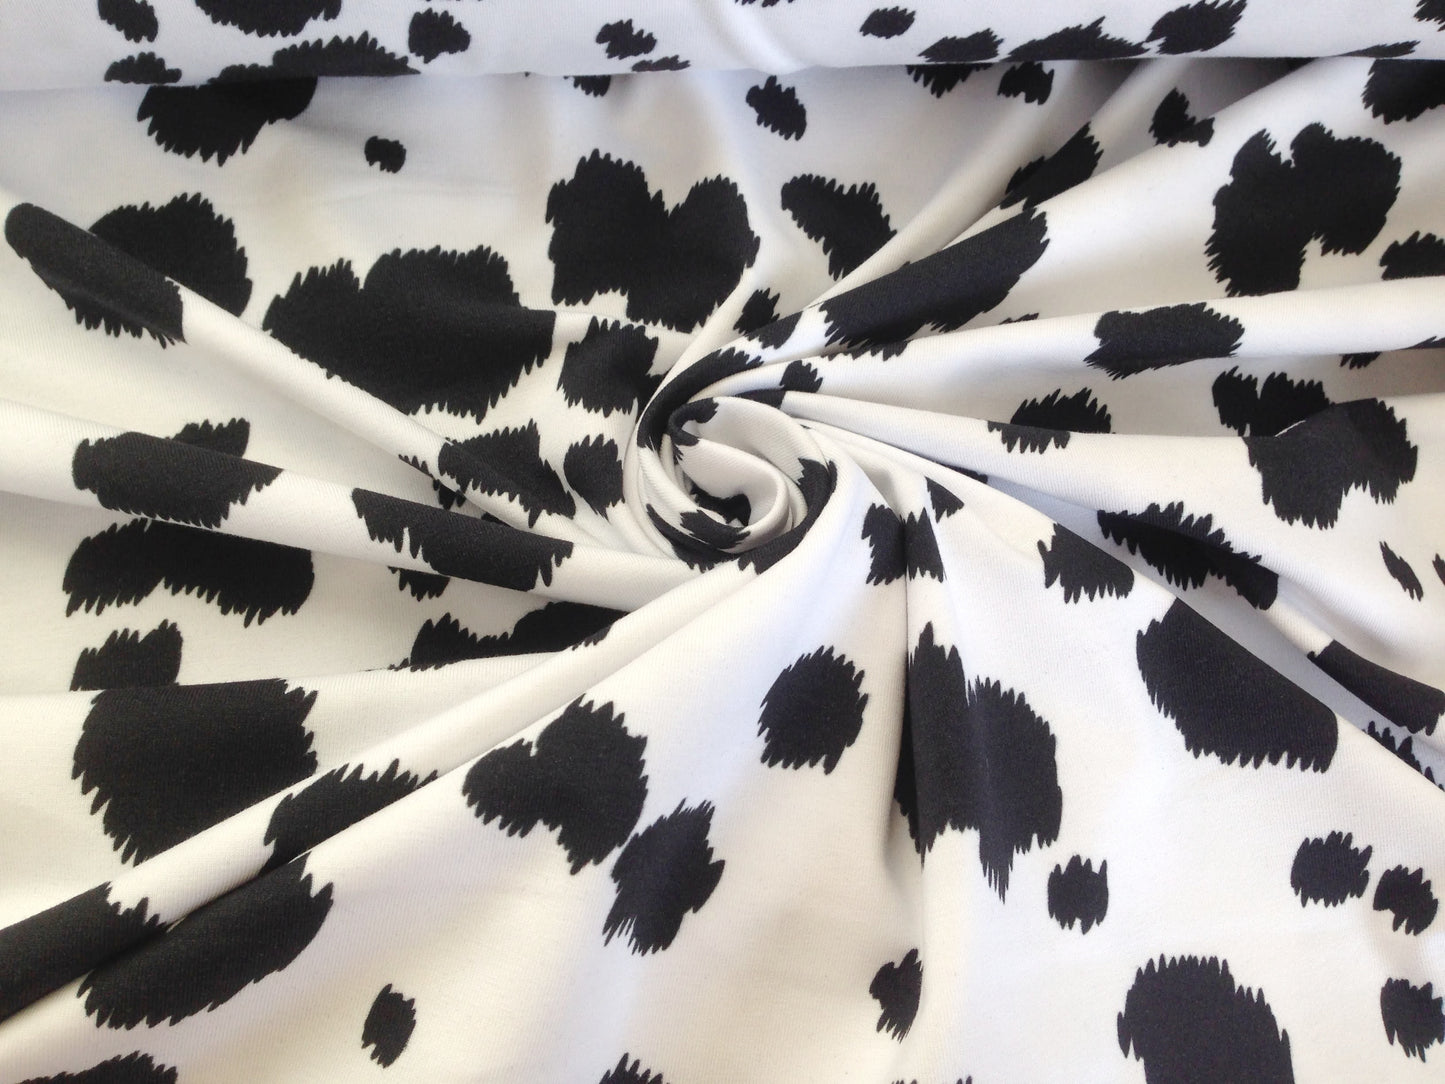 Dalmatian Spots black and white - organic jersey fabric